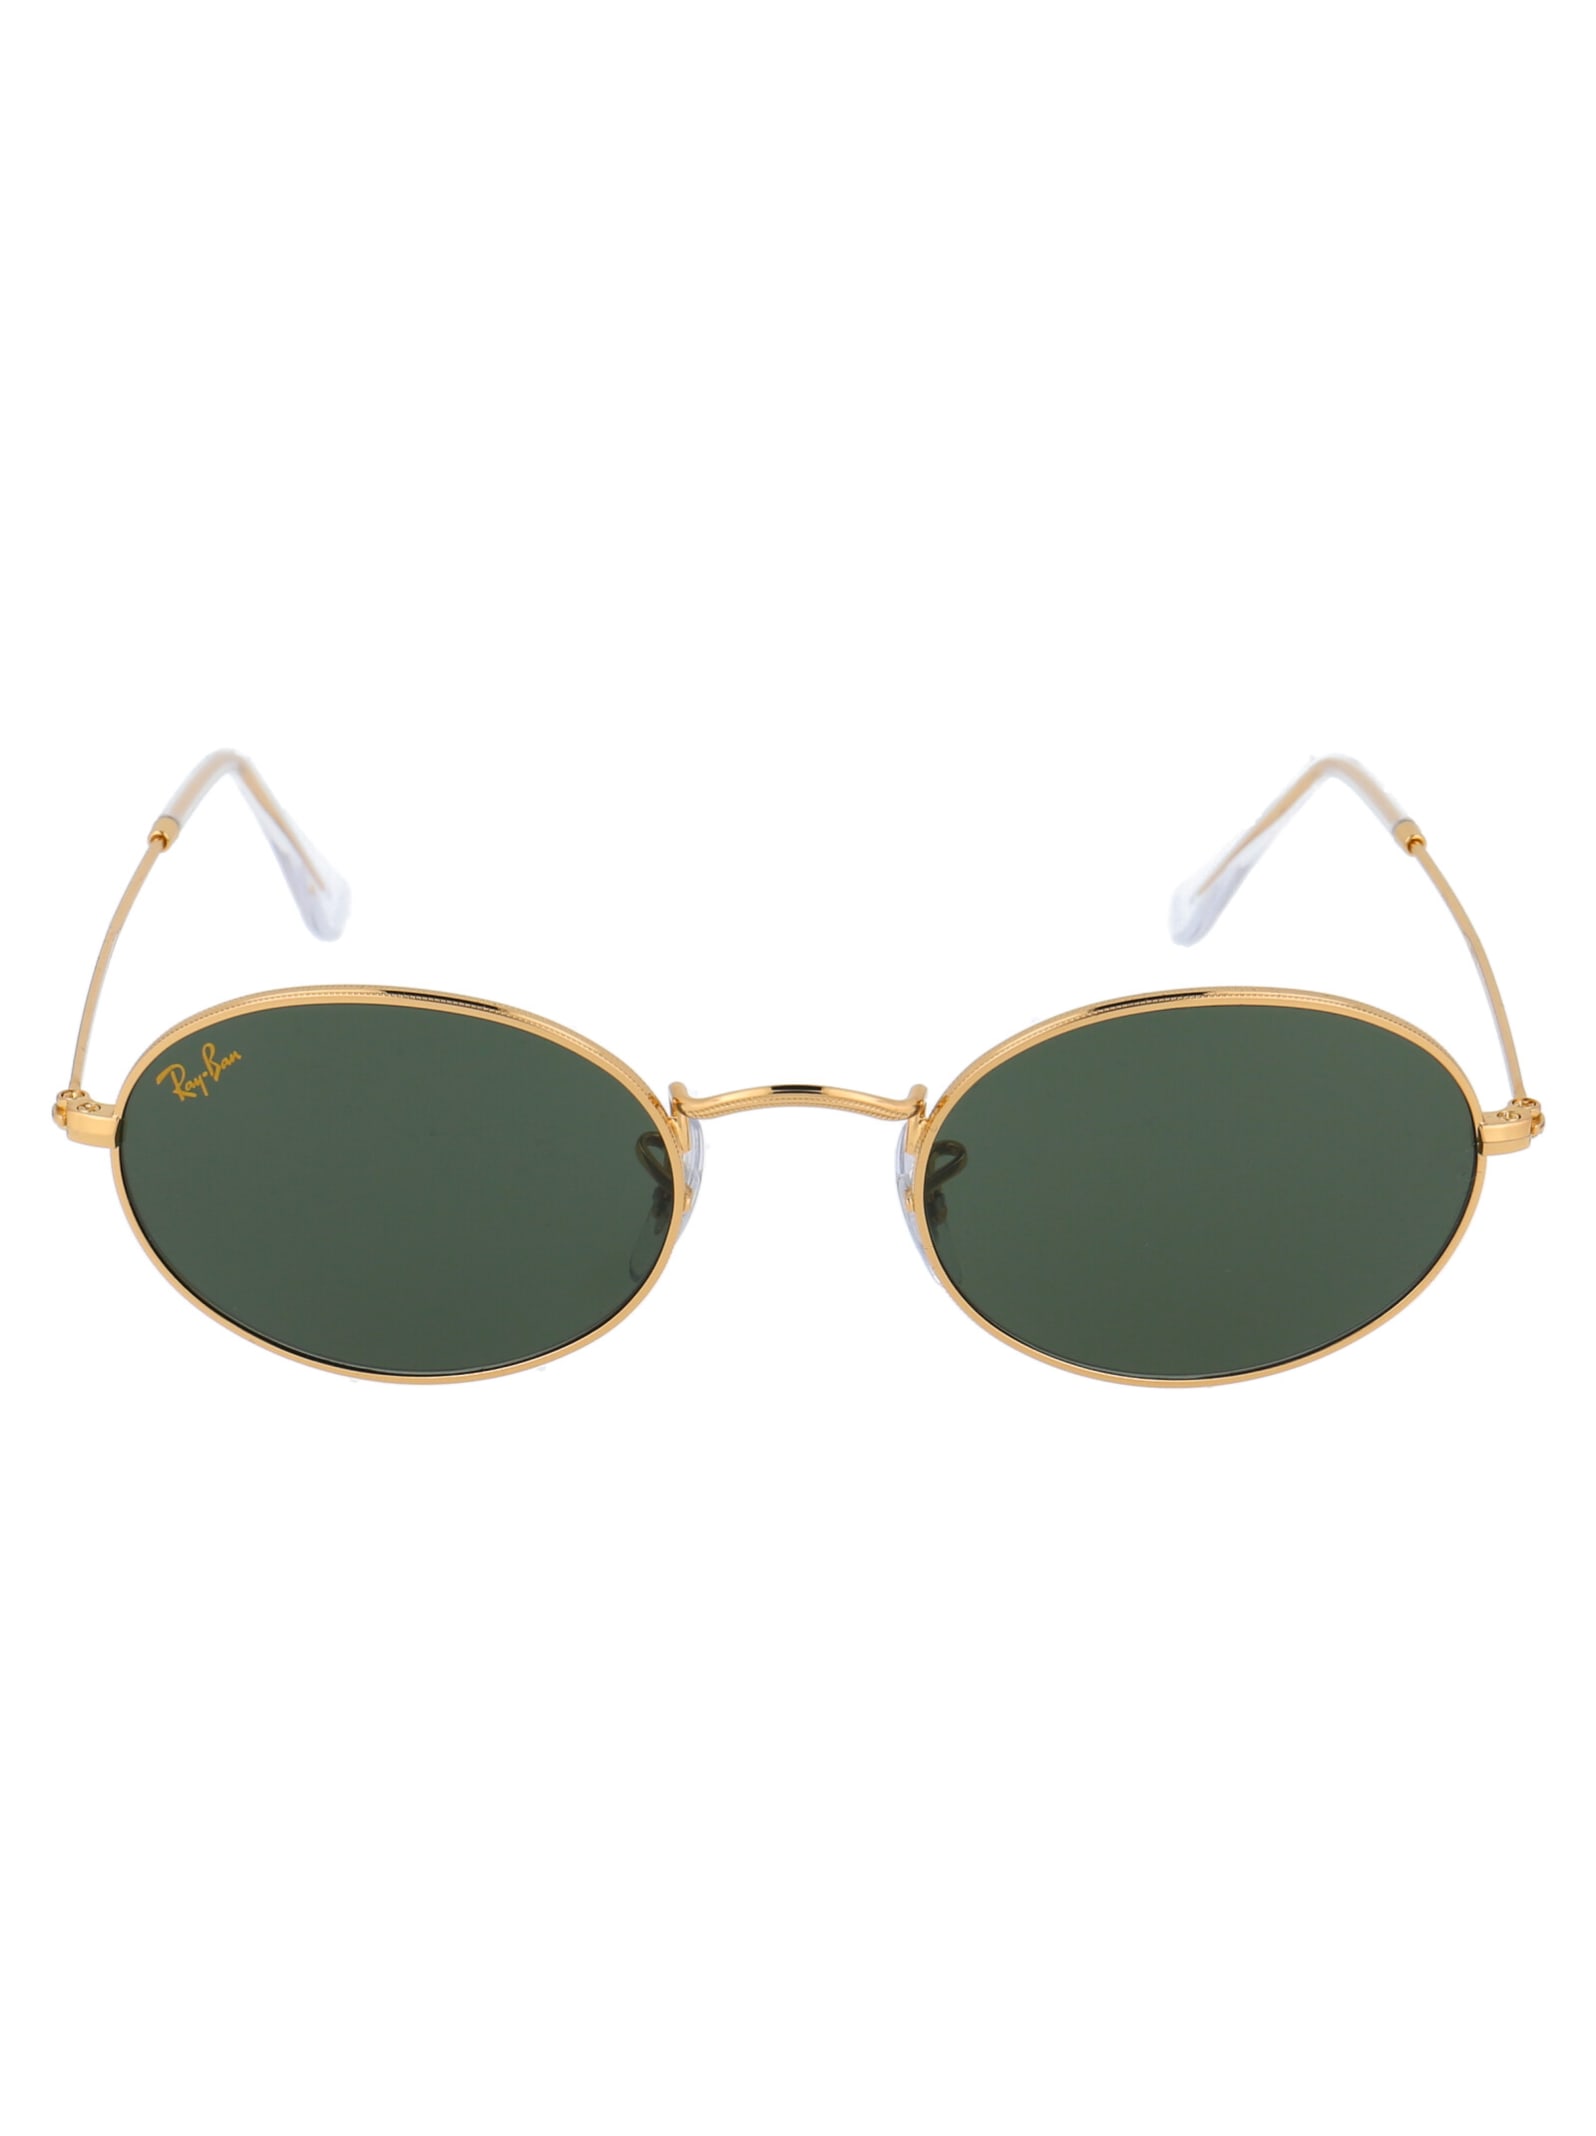 Ray-Ban Oval Sunglasses